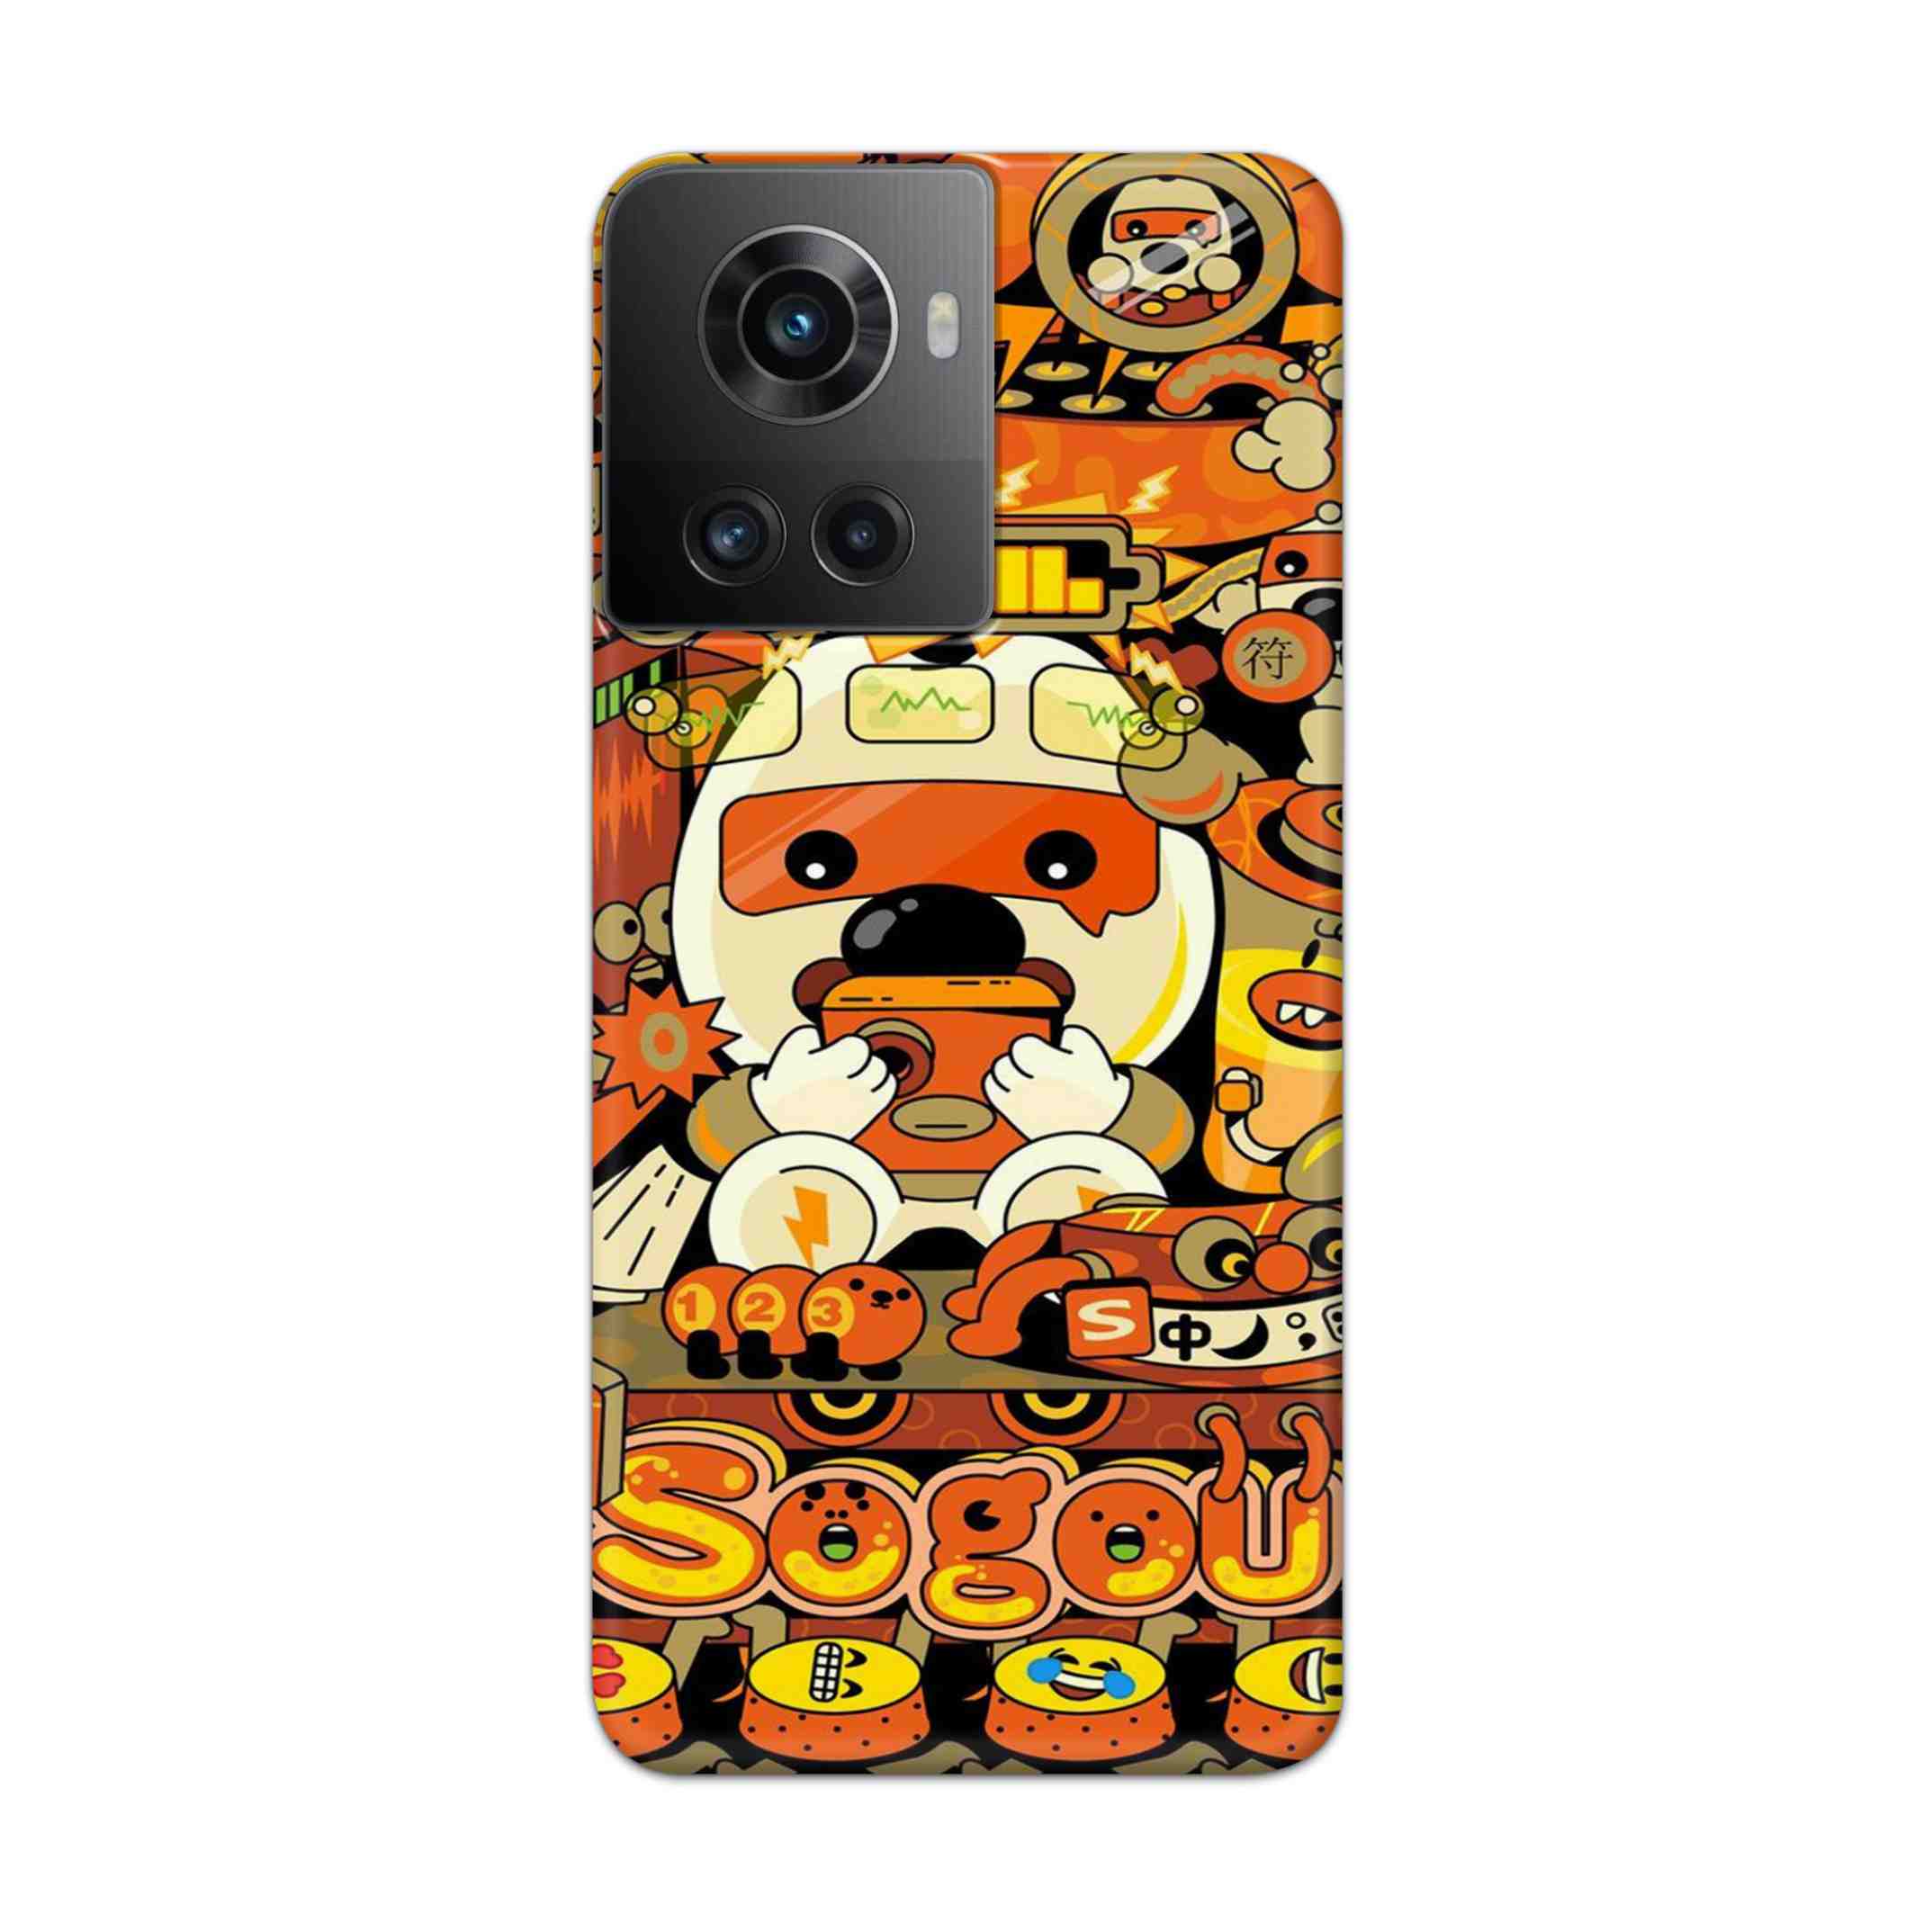 Buy Sogou Hard Back Mobile Phone Case Cover For Oneplus 10R Online